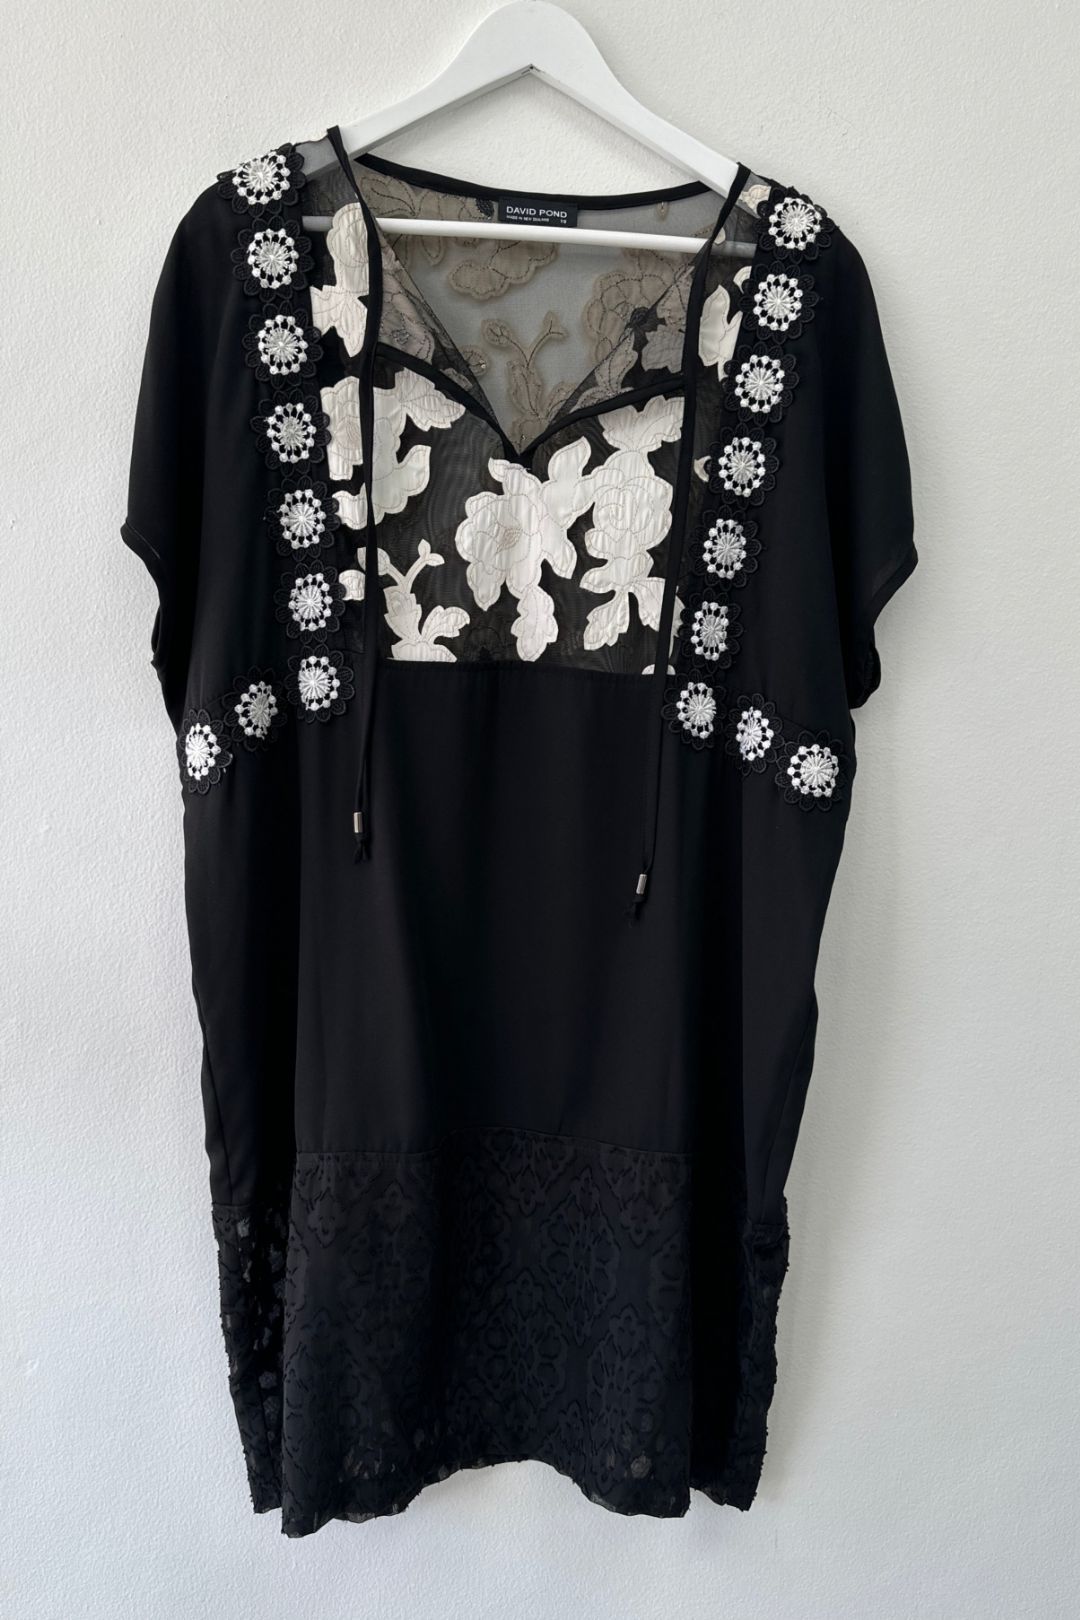 David Pond NZ - Black Embroidered Shift Dress